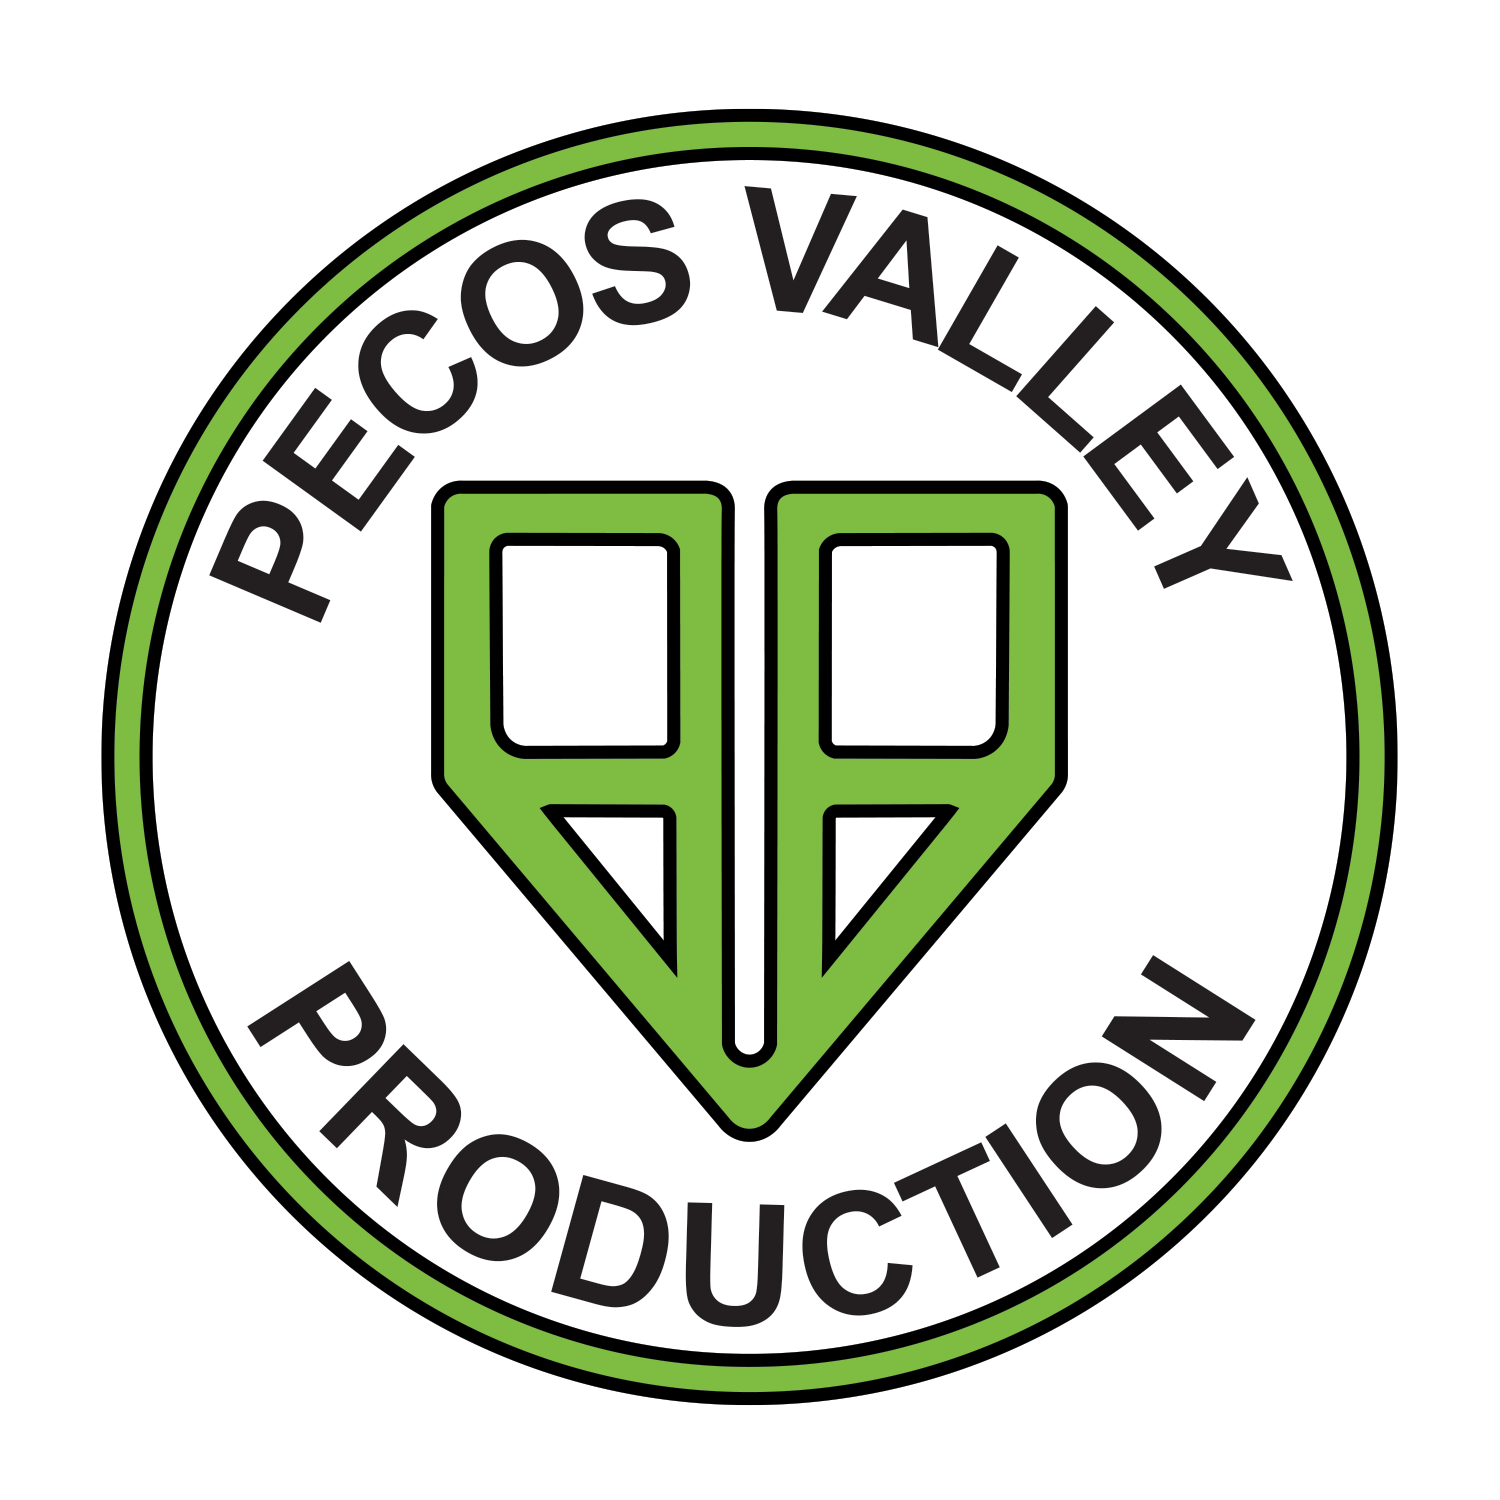 Pecos Valley Production- Sunland Park logo